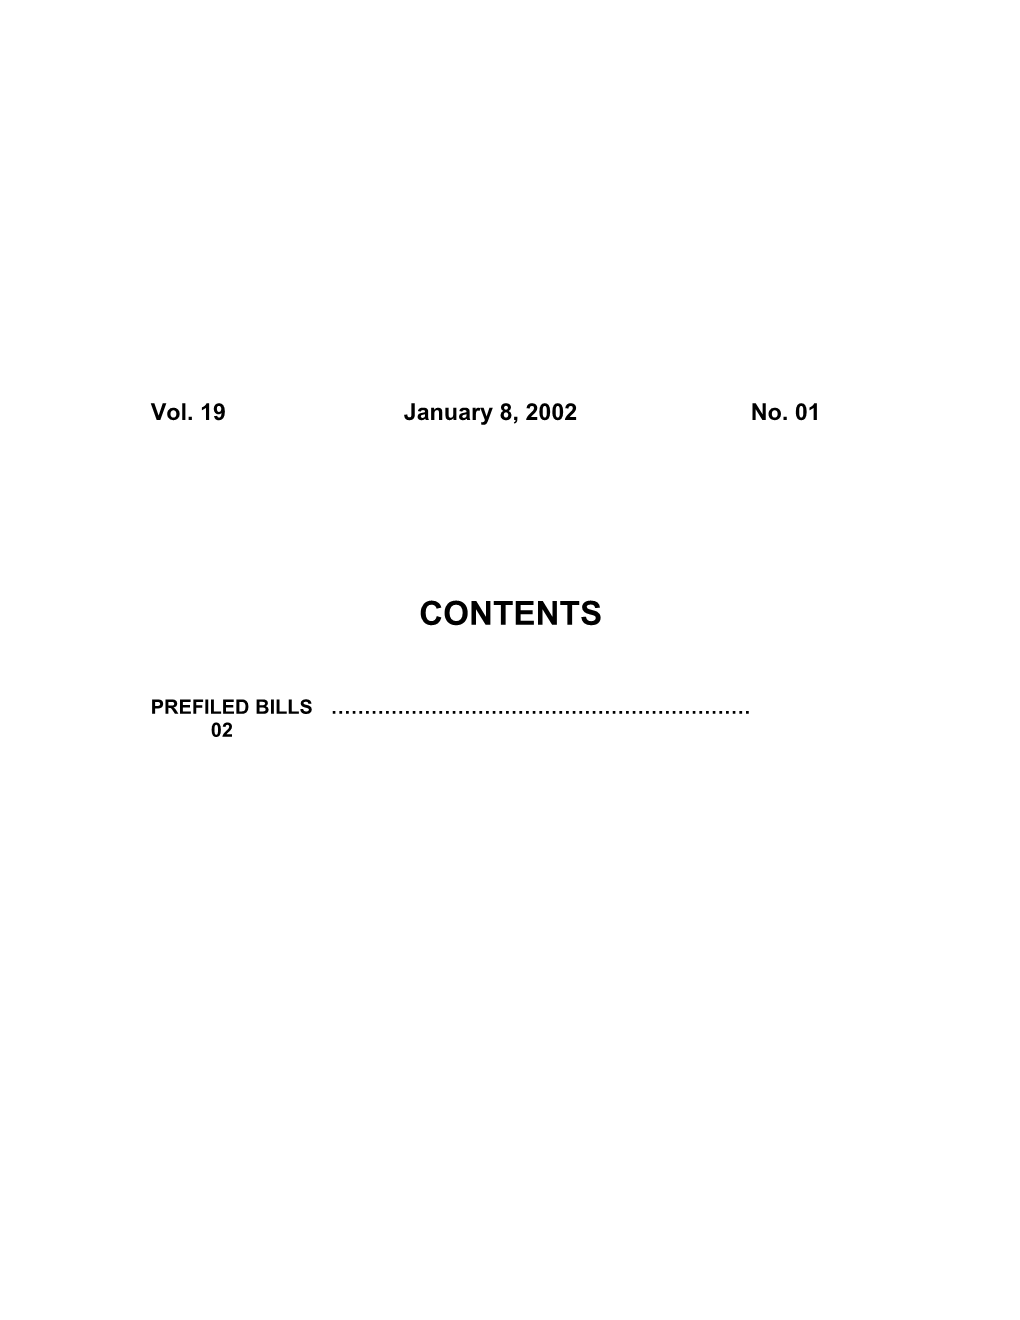 Legislative Update - Vol. 19 No. 01 January 8, 2002 - South Carolina Legislature Online